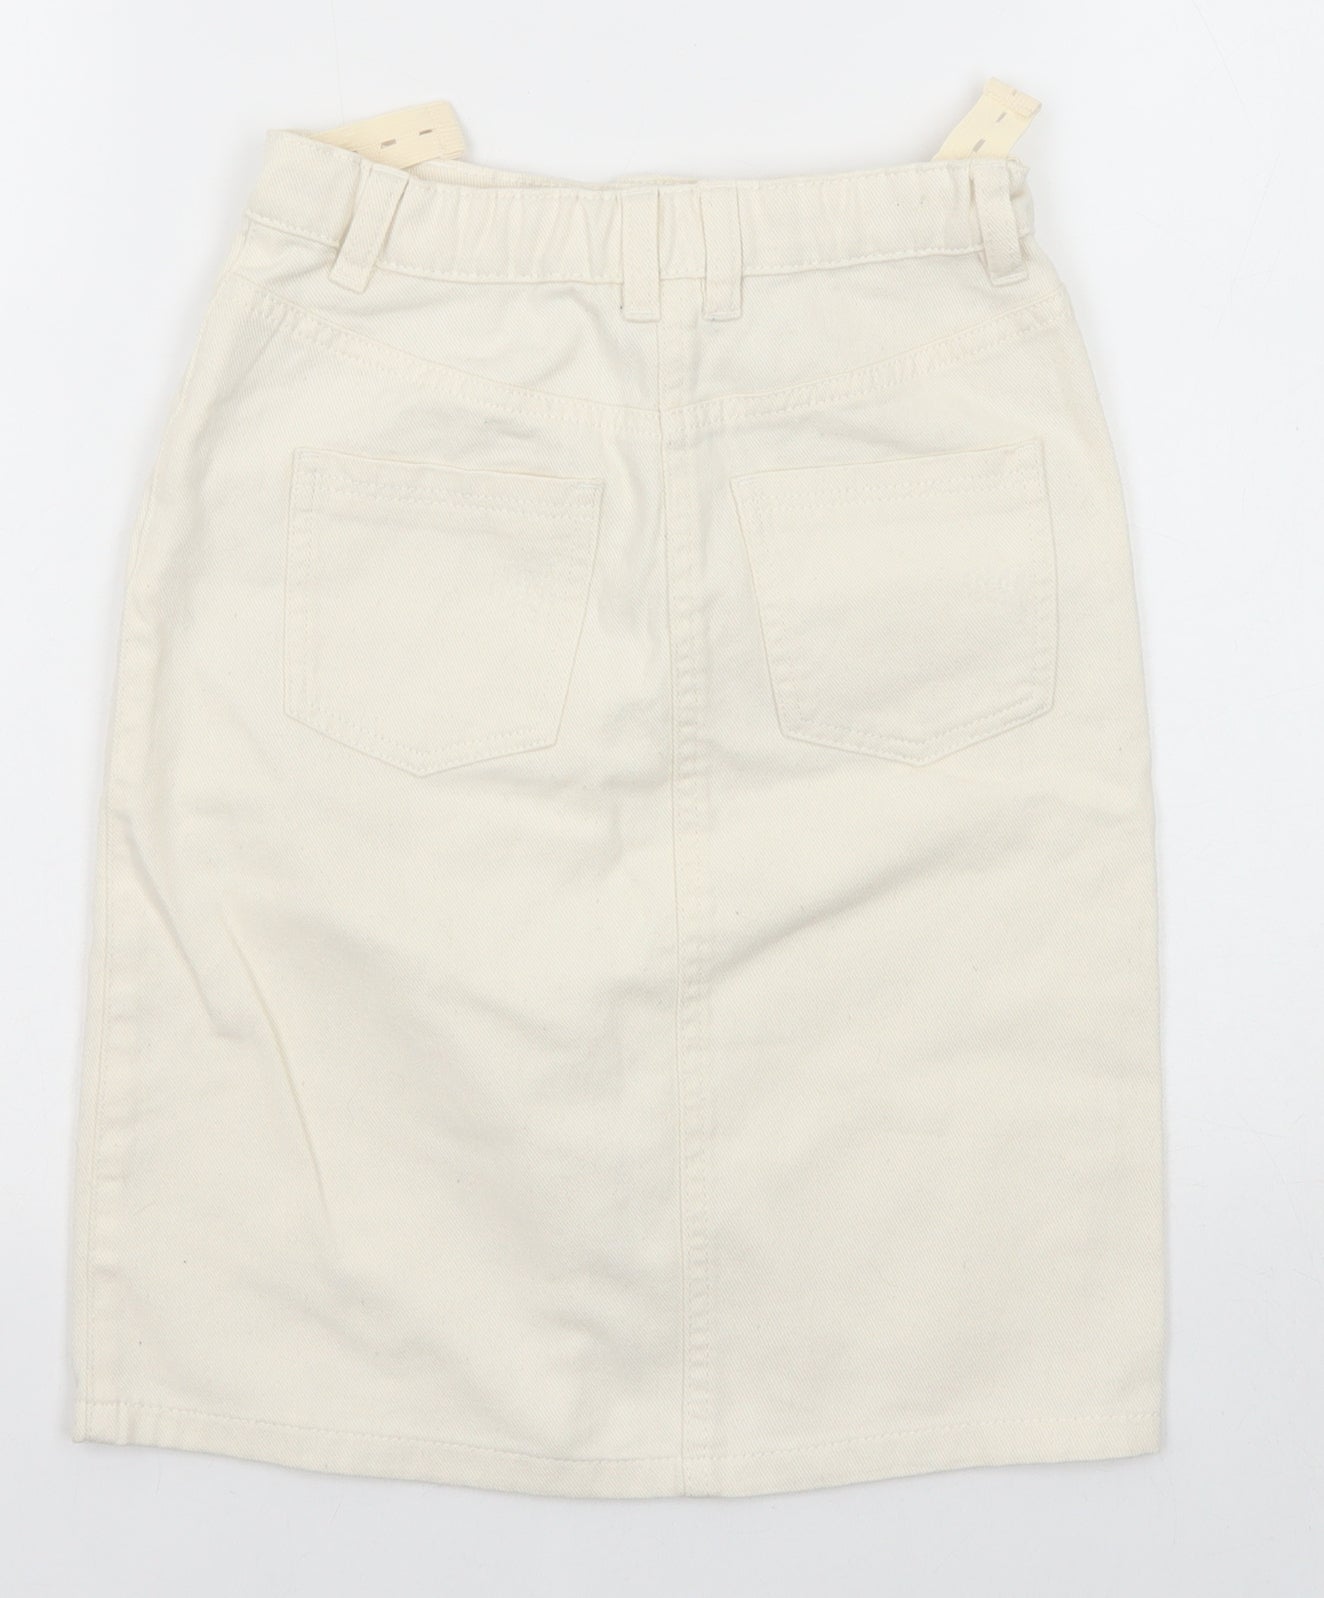 NEXT Girls Ivory Cotton Straight & Pencil Skirt Size 9 Years Regular Zip